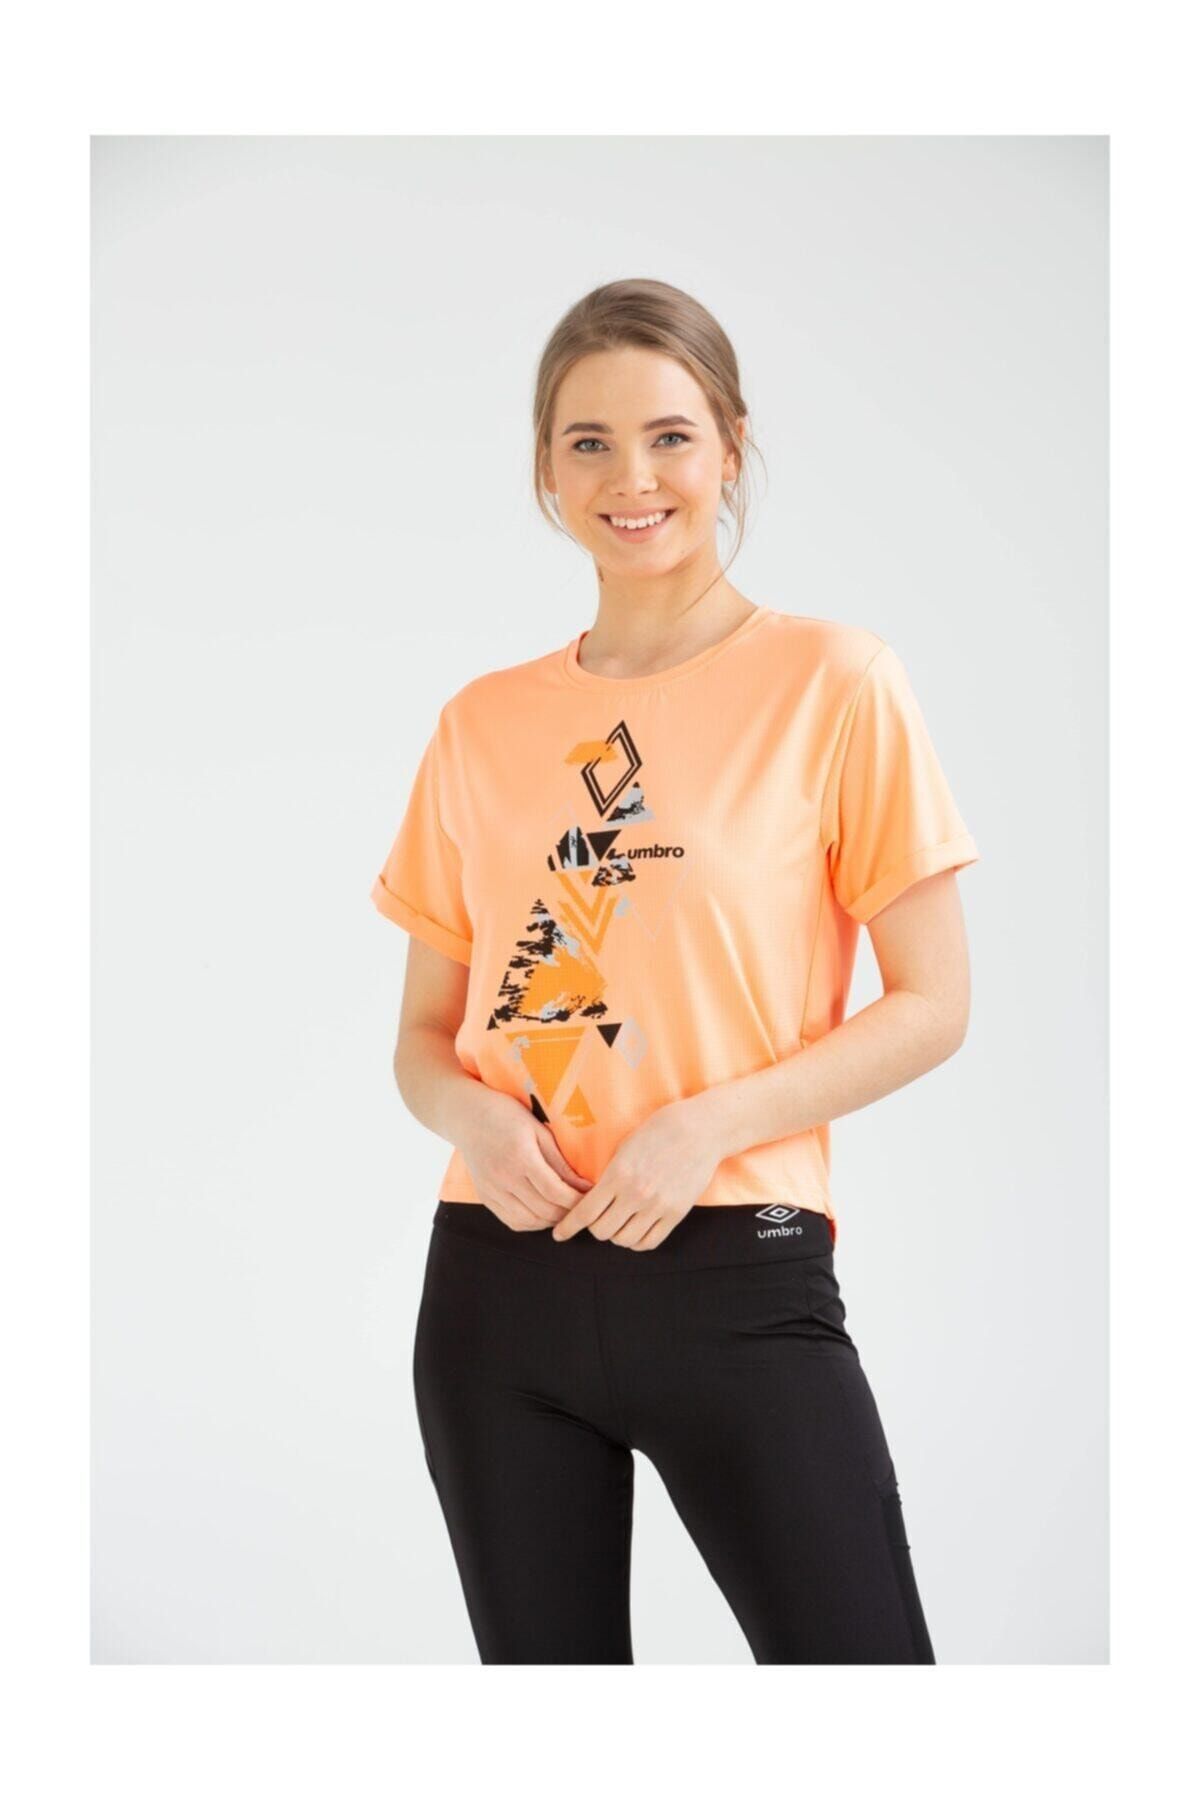 Umbro Kadın T-shirt Vf-0006 Vyan Tshirt